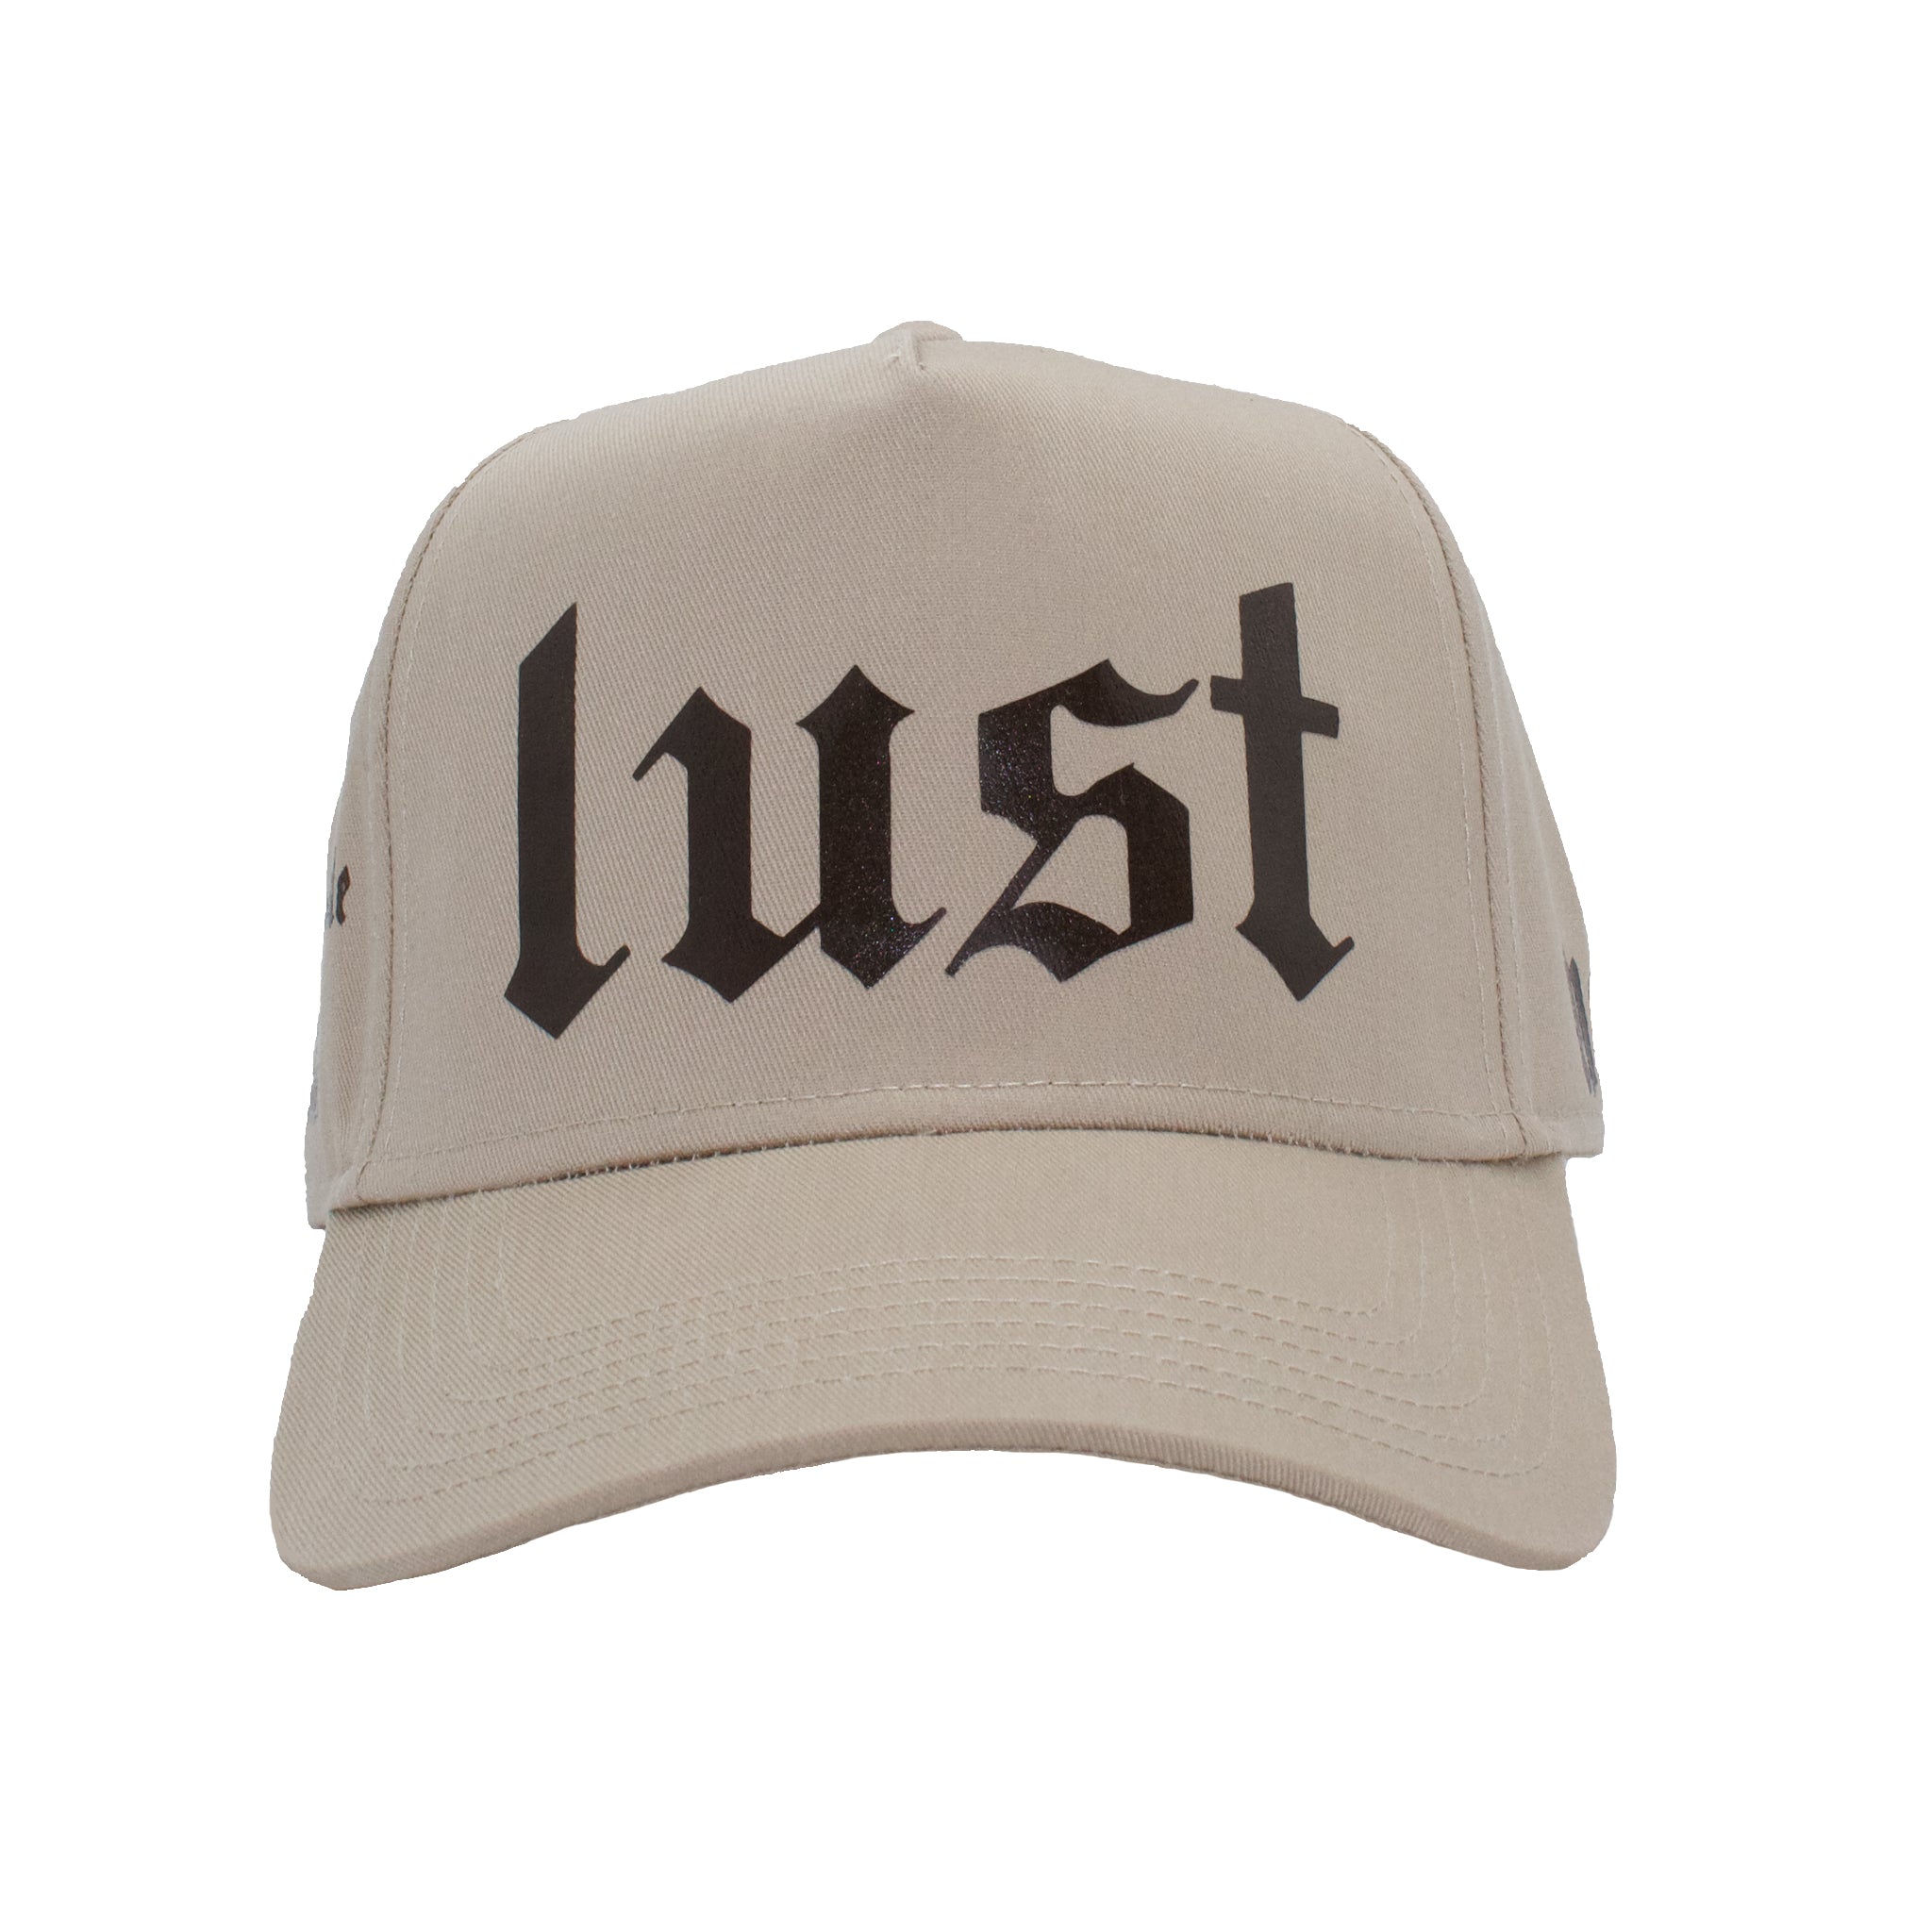 Lust Trucker Hat Tan & Brown